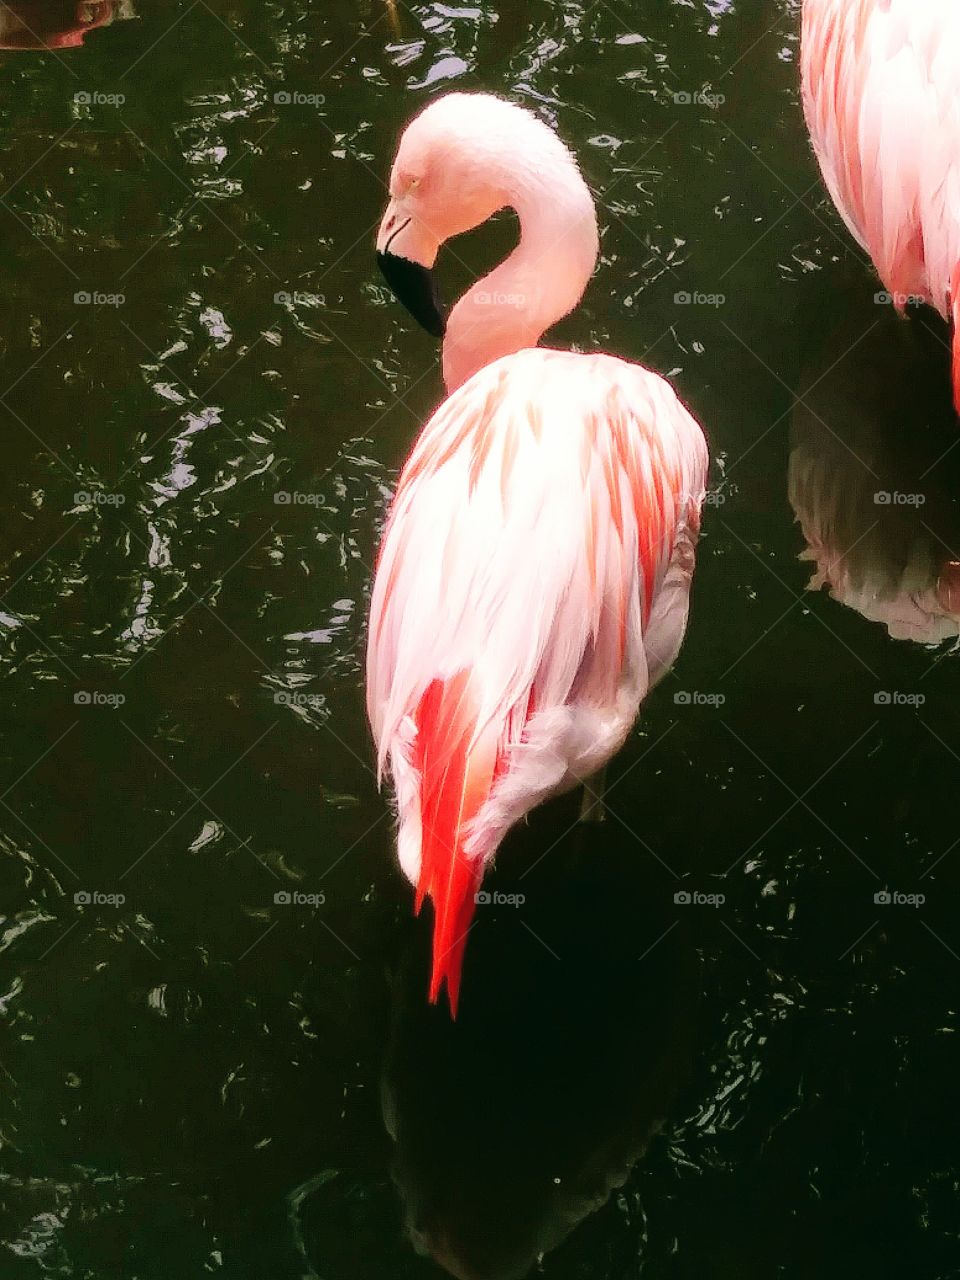 I love the shape of this flamingo